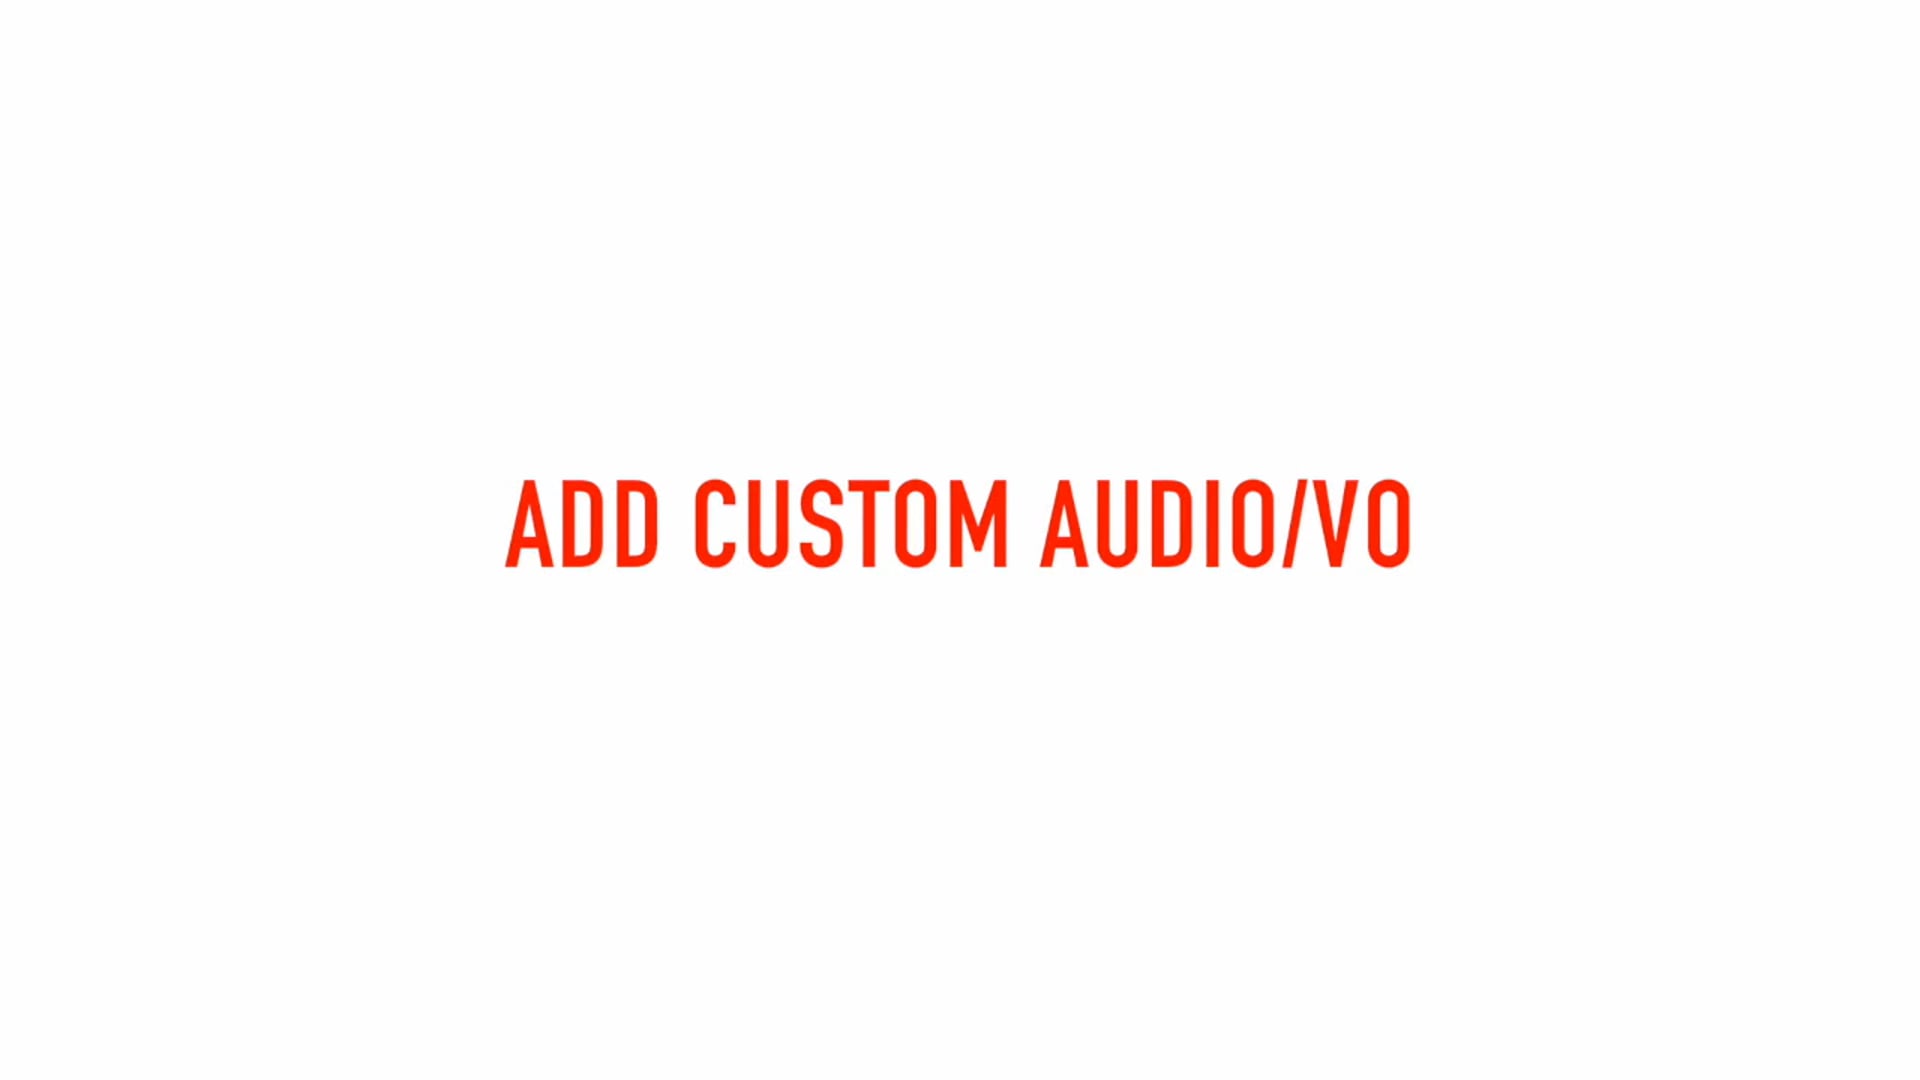 Express Tutorial - Adding Custom Audio